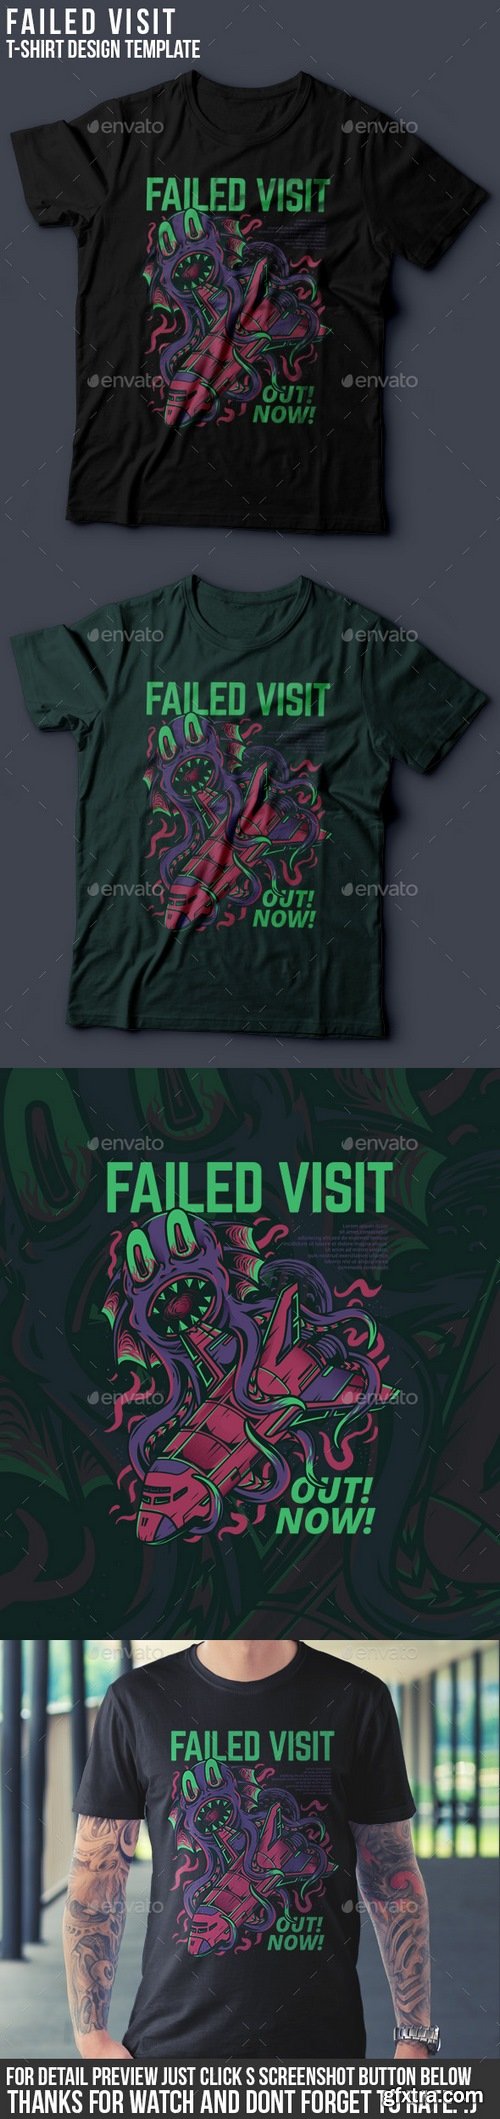 Graphicriver - Failed Visit T-Shirt Design 20994944